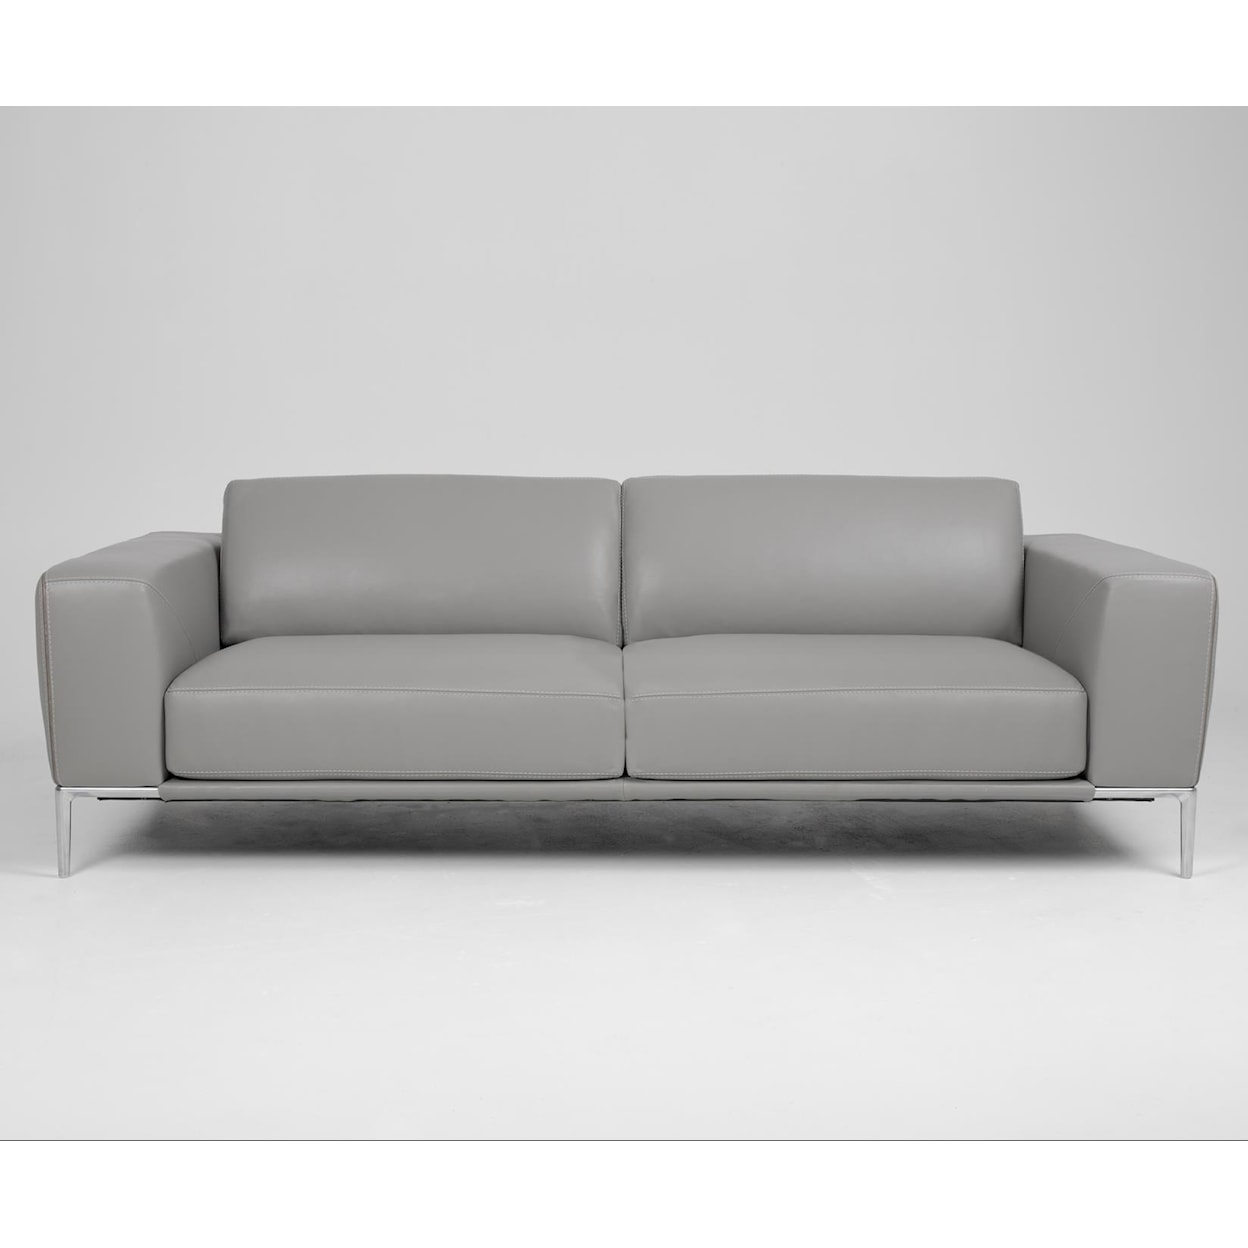 American Leather Manhattan 2-Seat Sofa